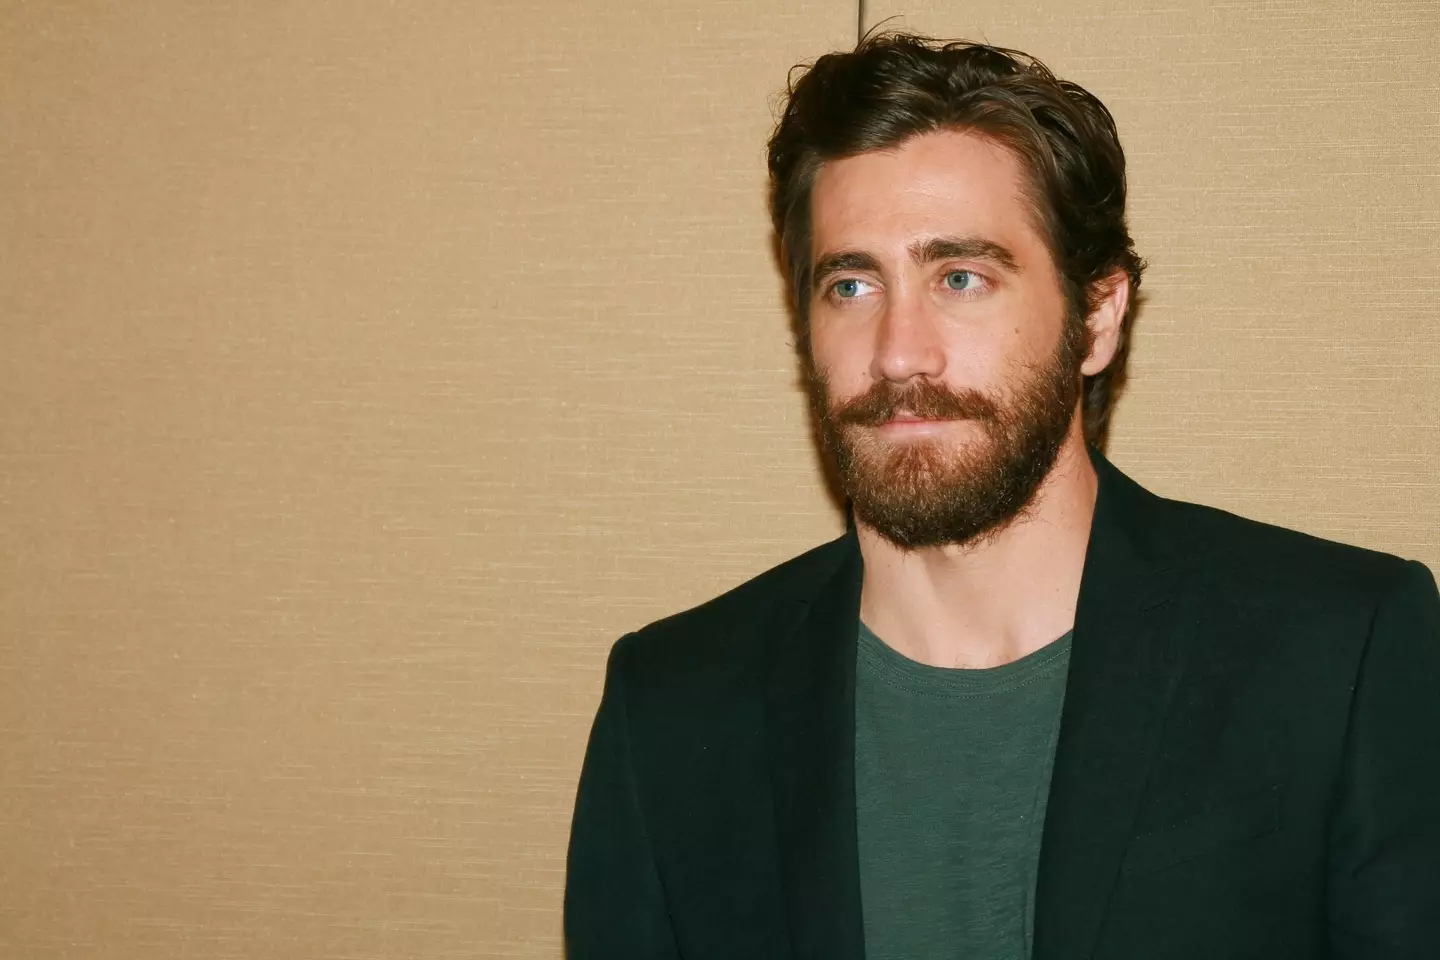 Jake Gyllenhaal has criticised Swift's fans (